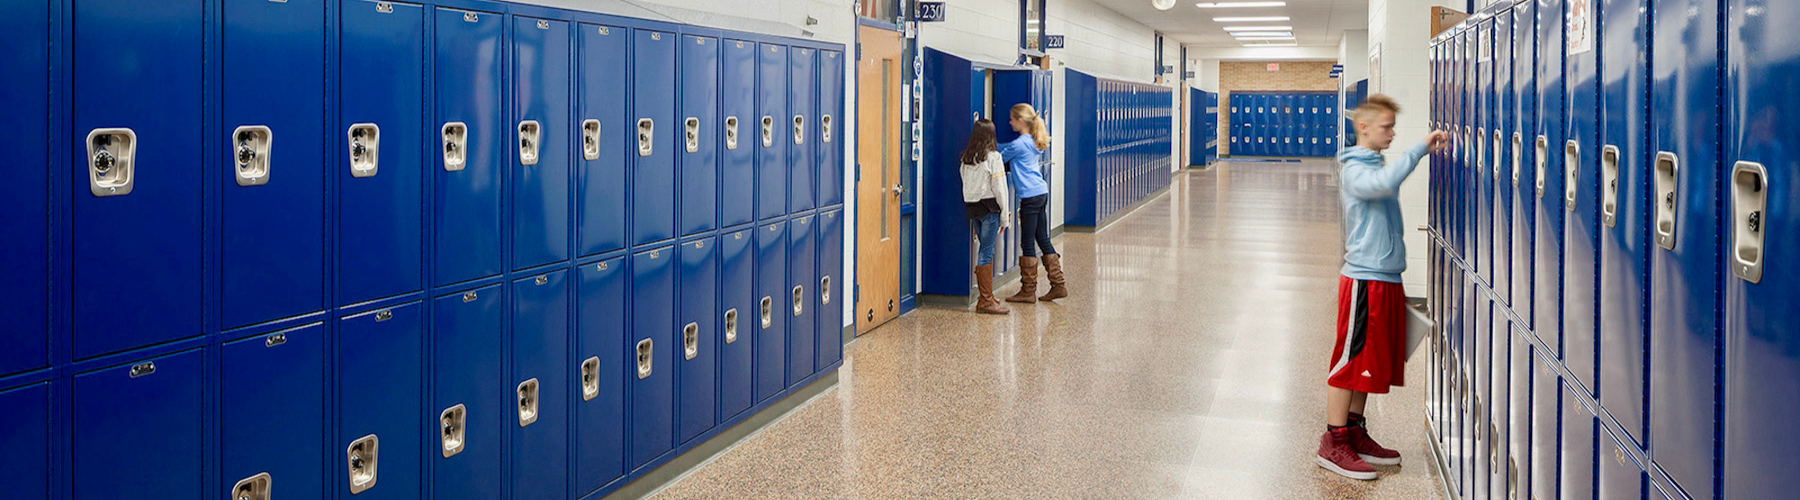 Jr-Sr High School - Hallway